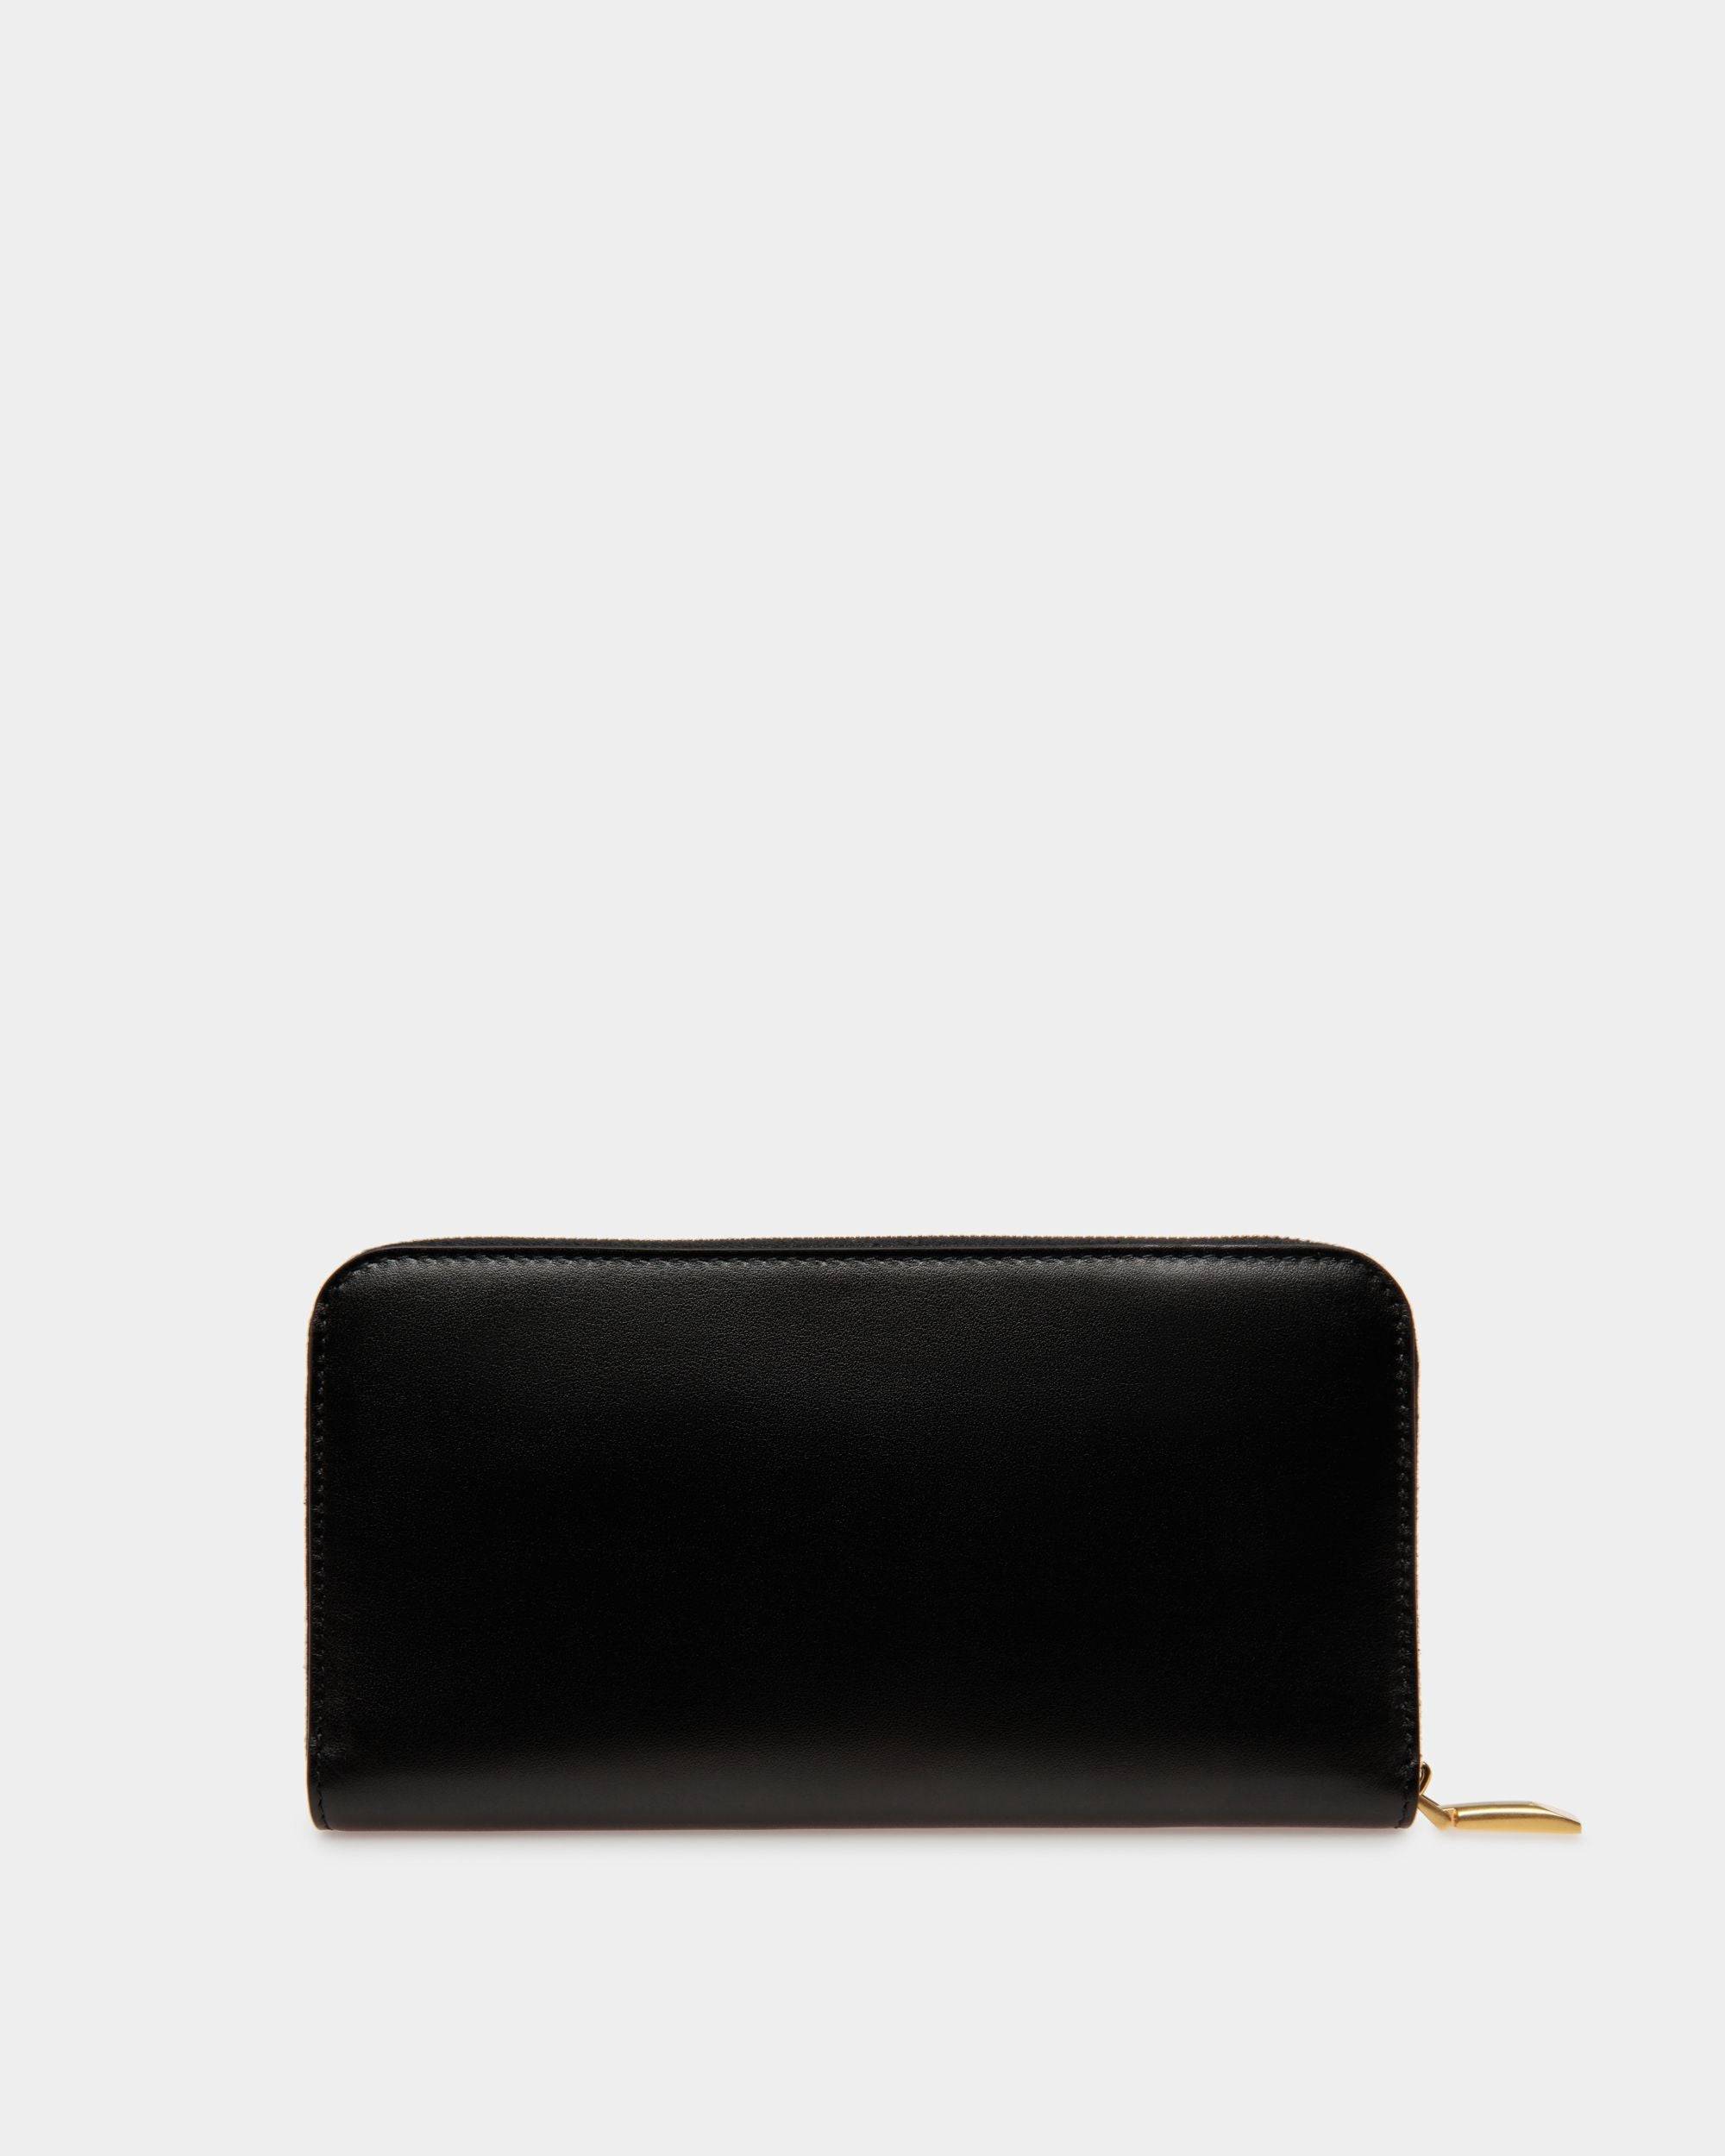 Emblem | Women's Long Wallet in Black Leather | Bally | Still Life Back